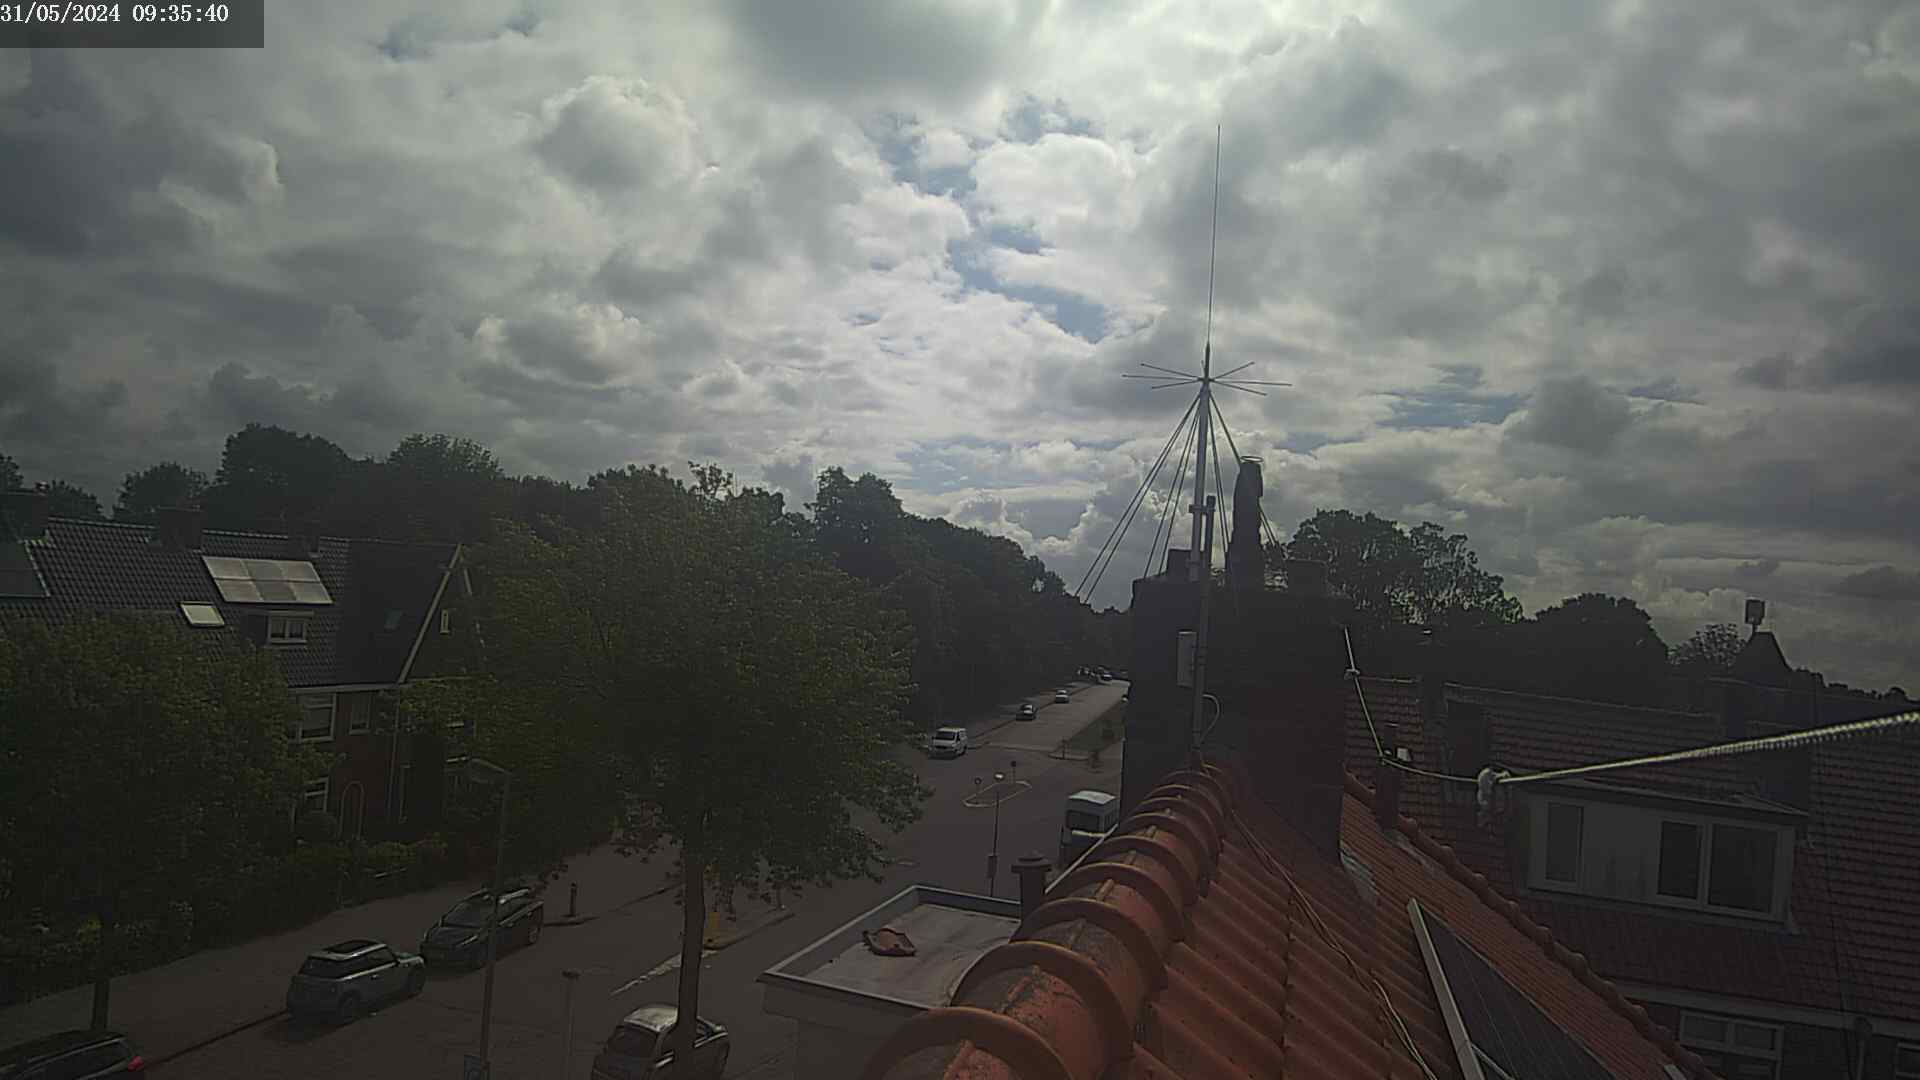 Haarlem Gio. 10:35